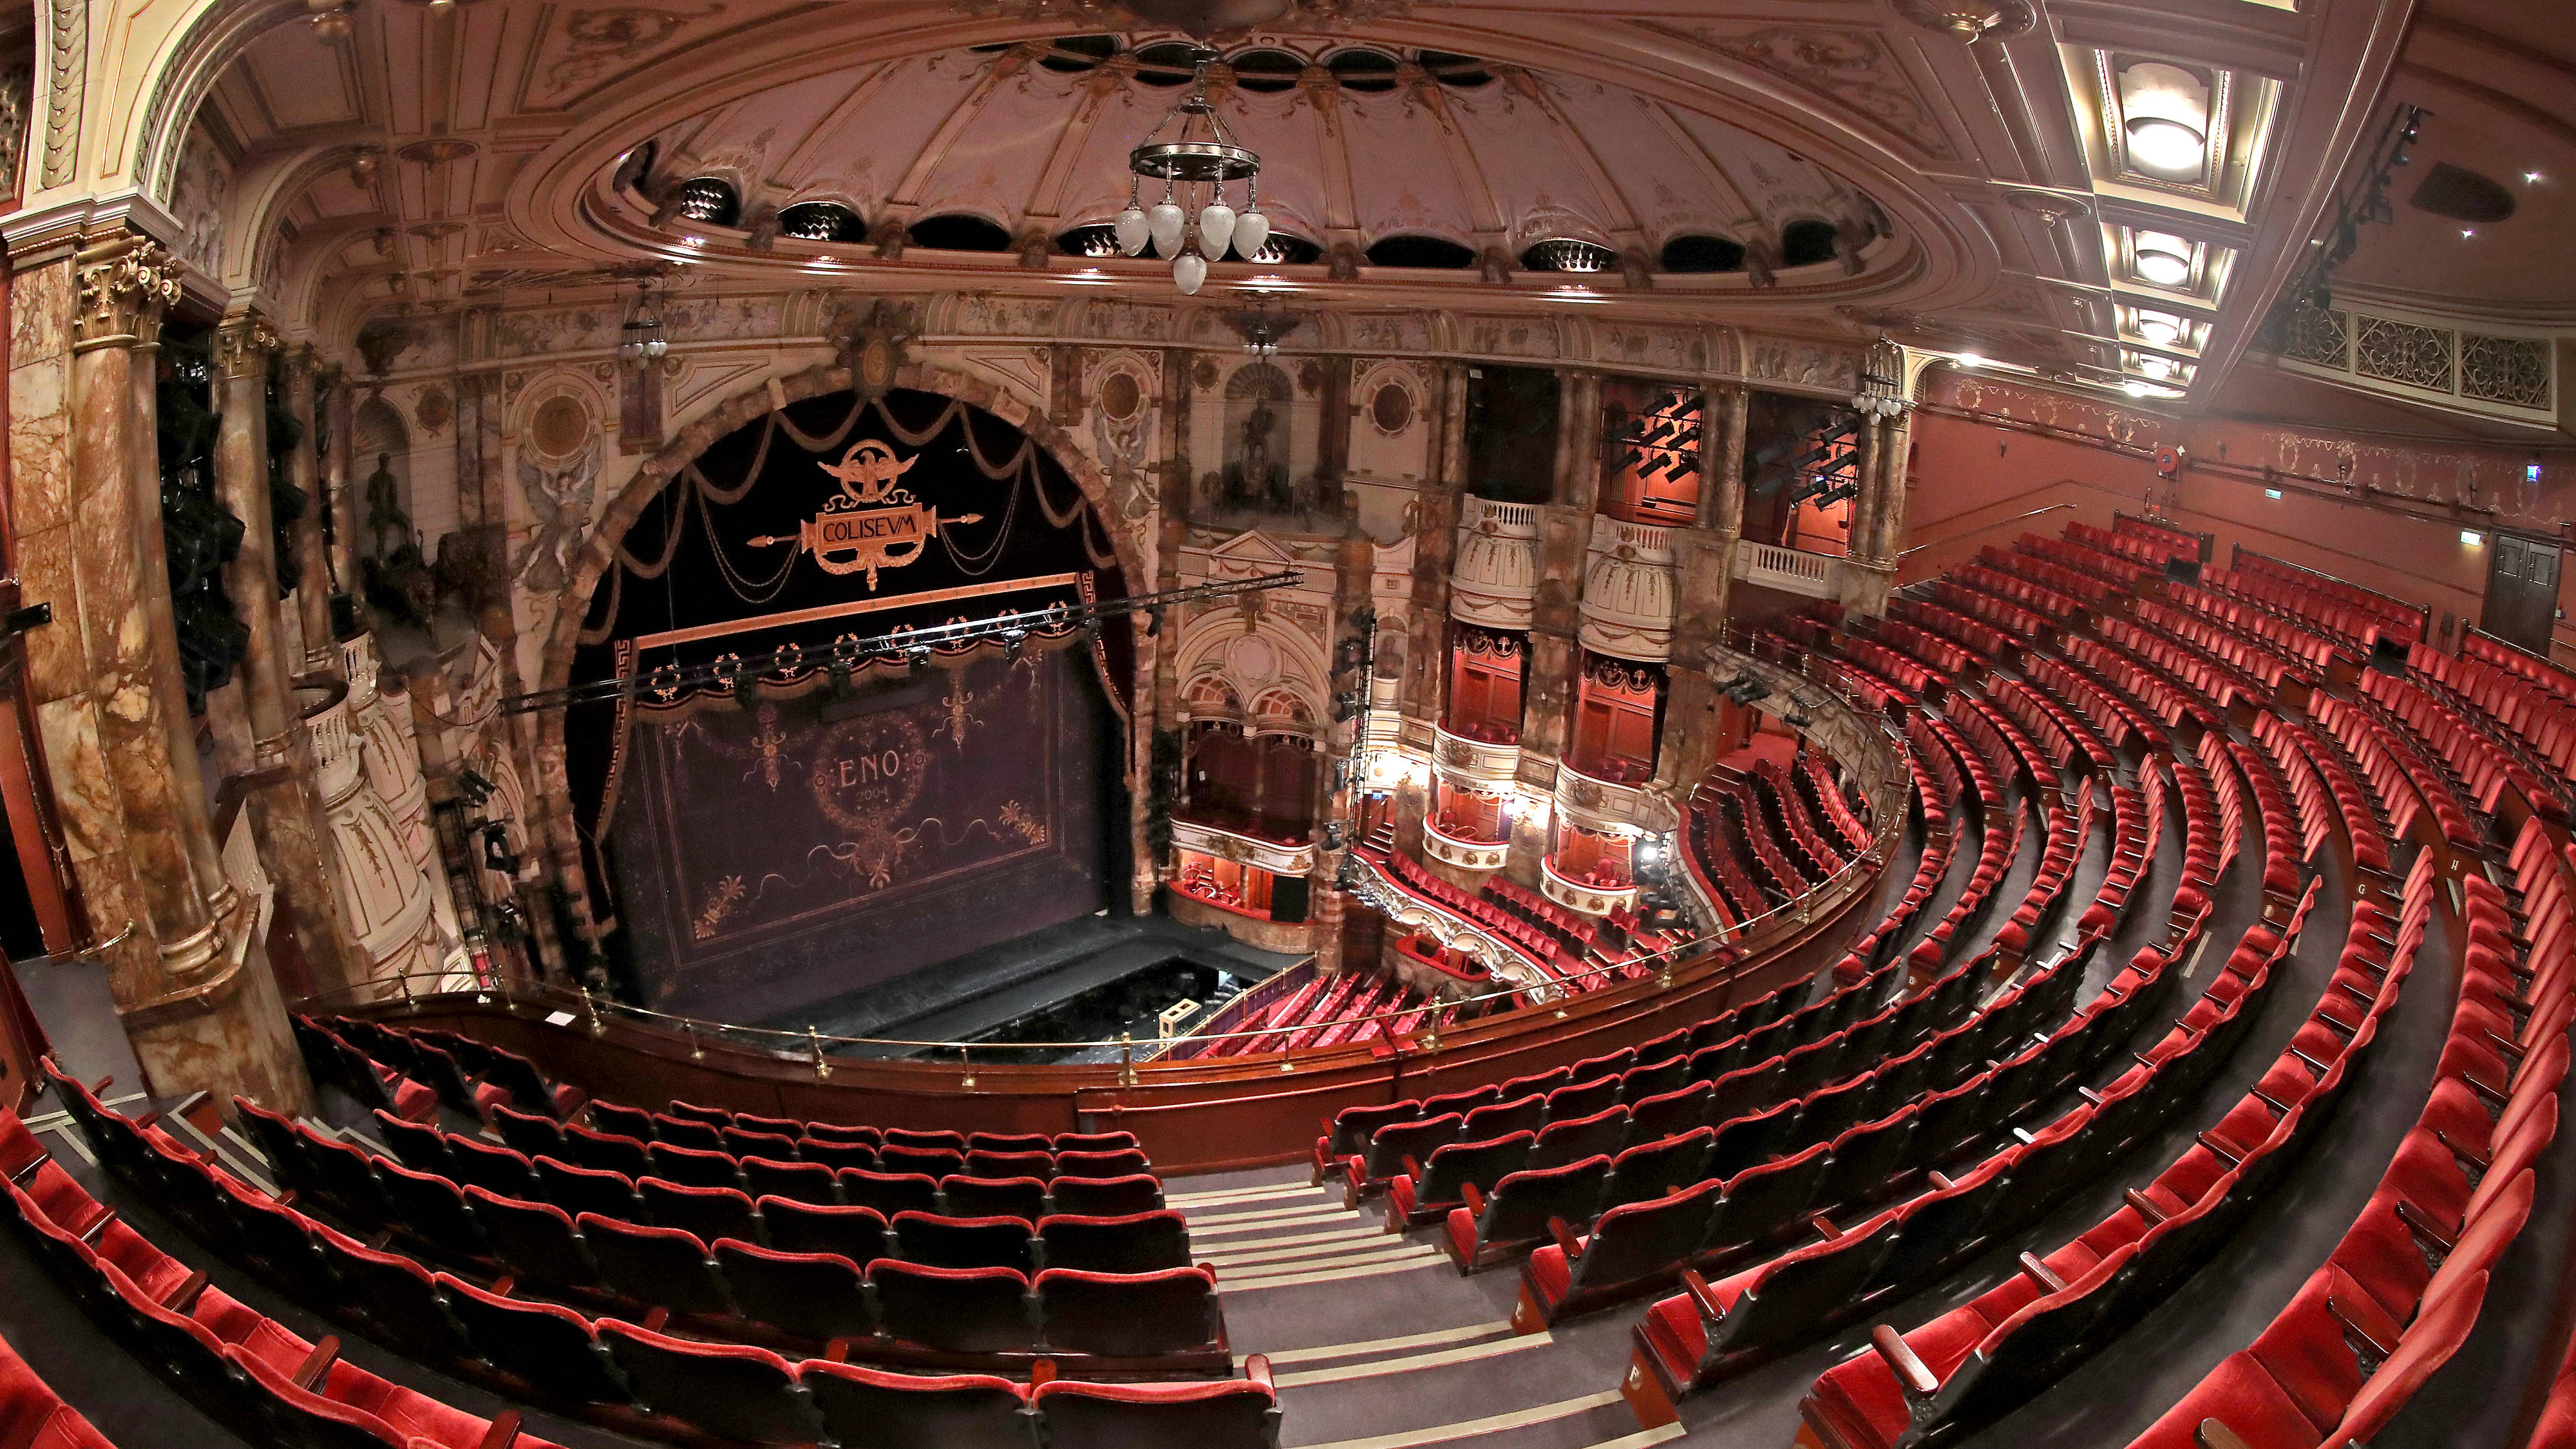 The year of the theater. Театр Колизеум в Лондоне. Театр Колизей Лондон. Королевский театр Ковент-Гарден. Театр Колизей Лондон внутри.